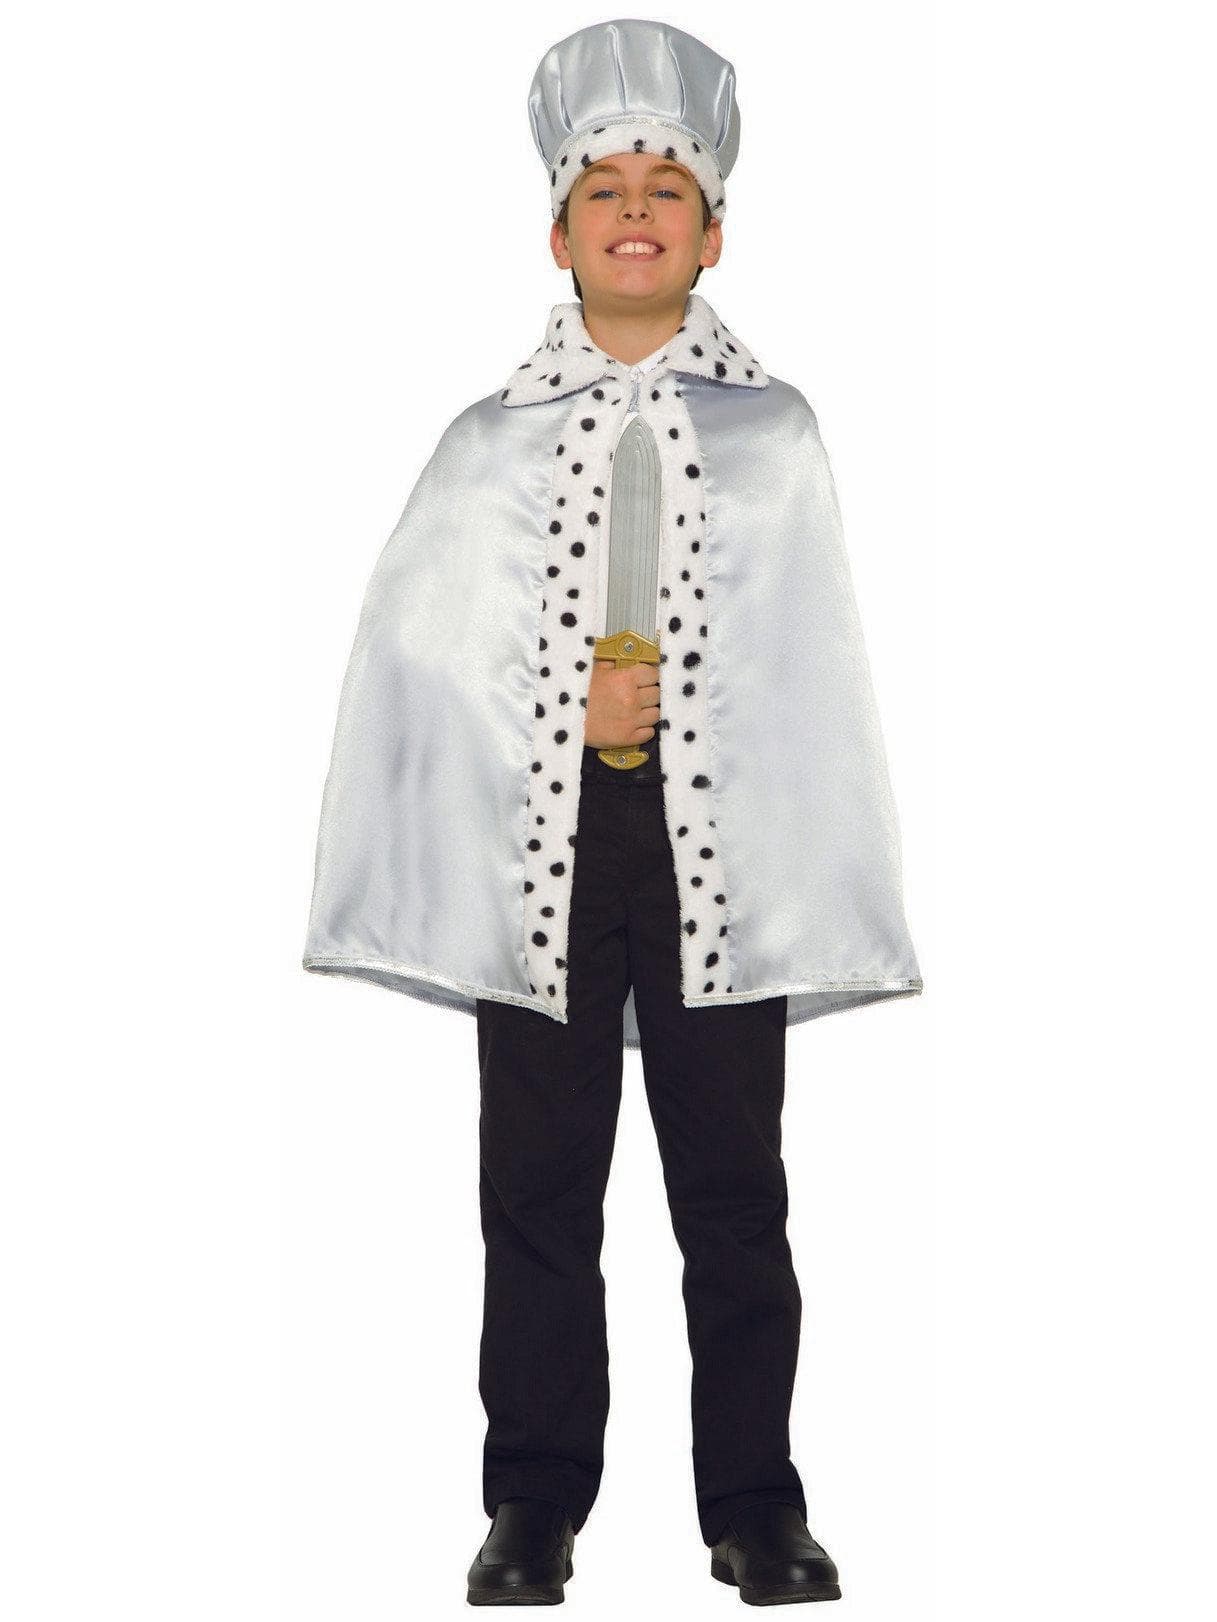 Kids' Silver Faux Fur Trimmed Crown - costumes.com